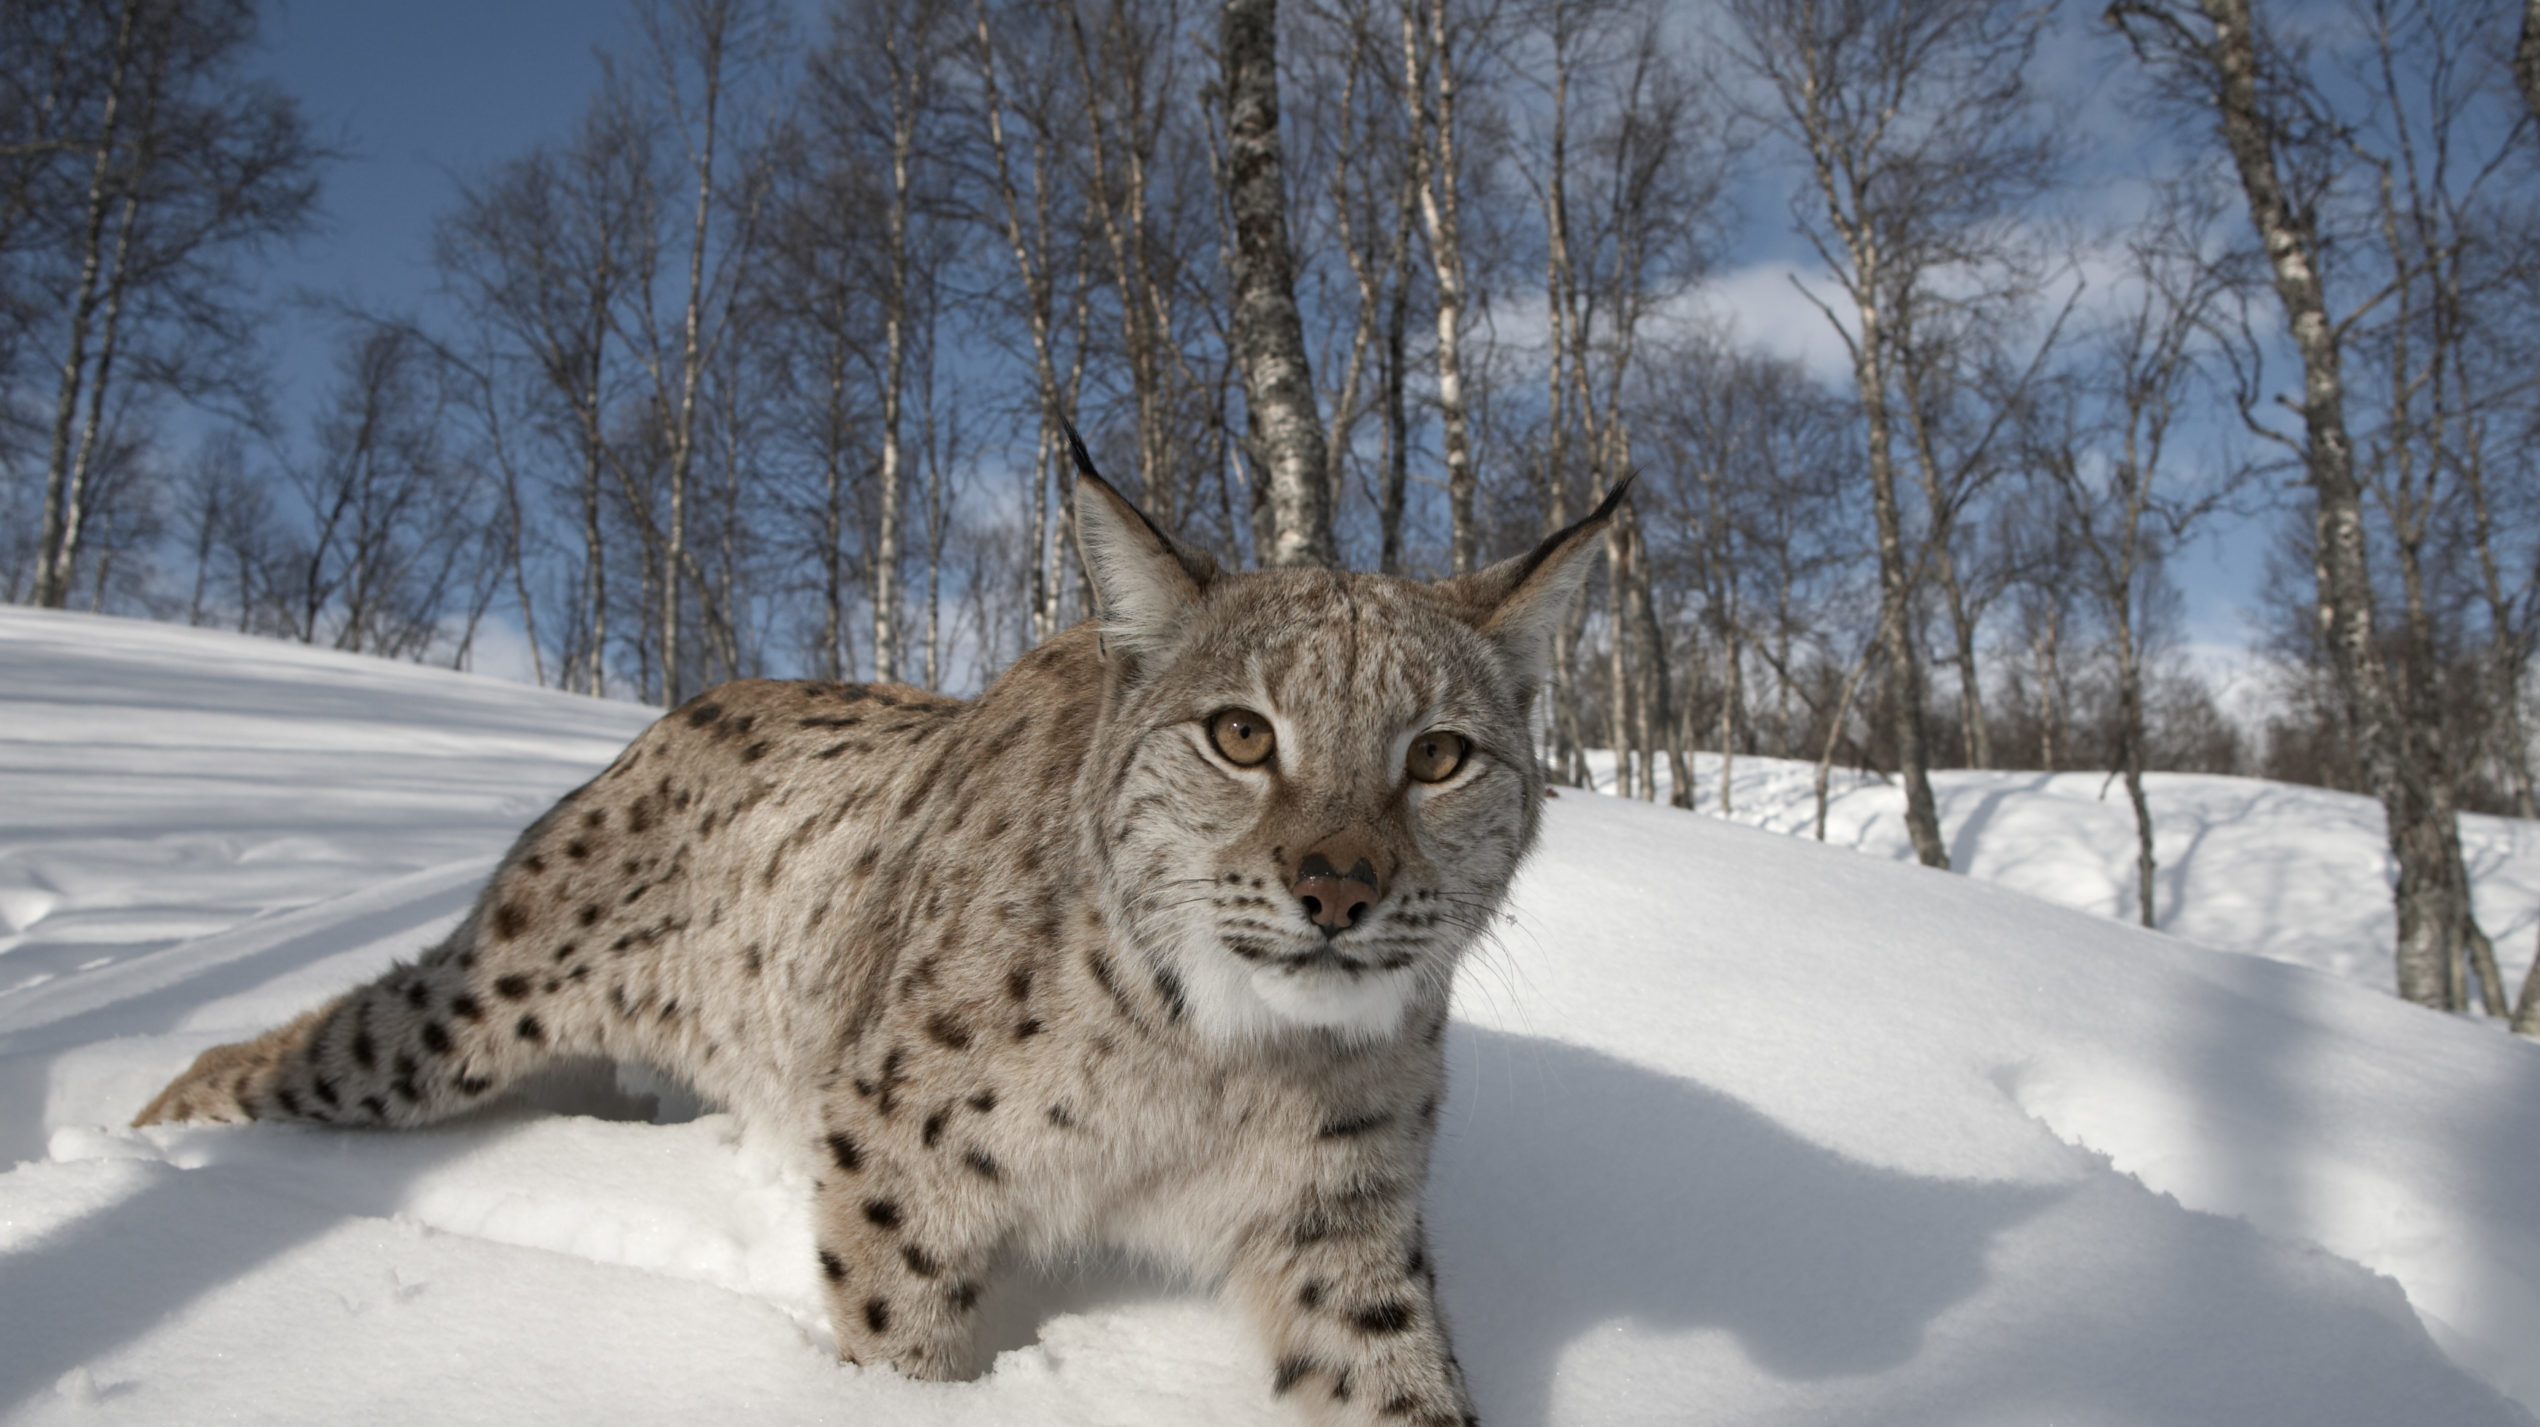 A European Lynx sitting in the snow